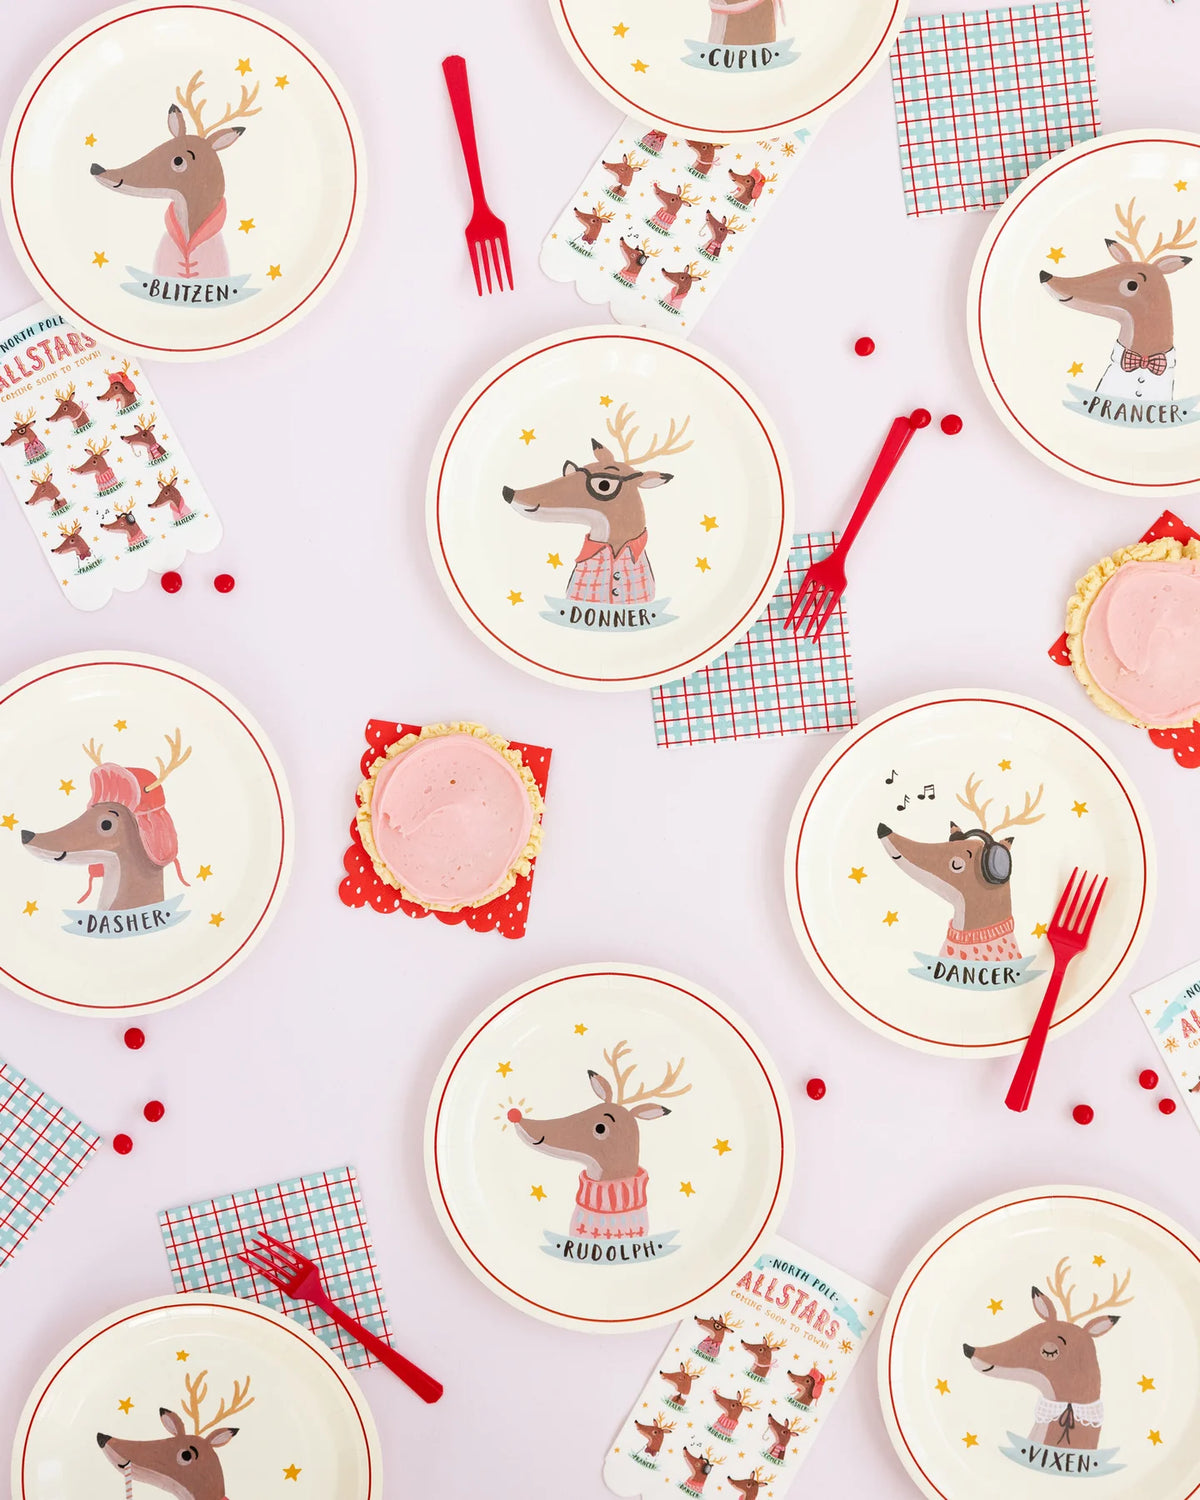 Paper Plate Christmas Characters: Santa, Rudolph, Snowman · Kix Cereal